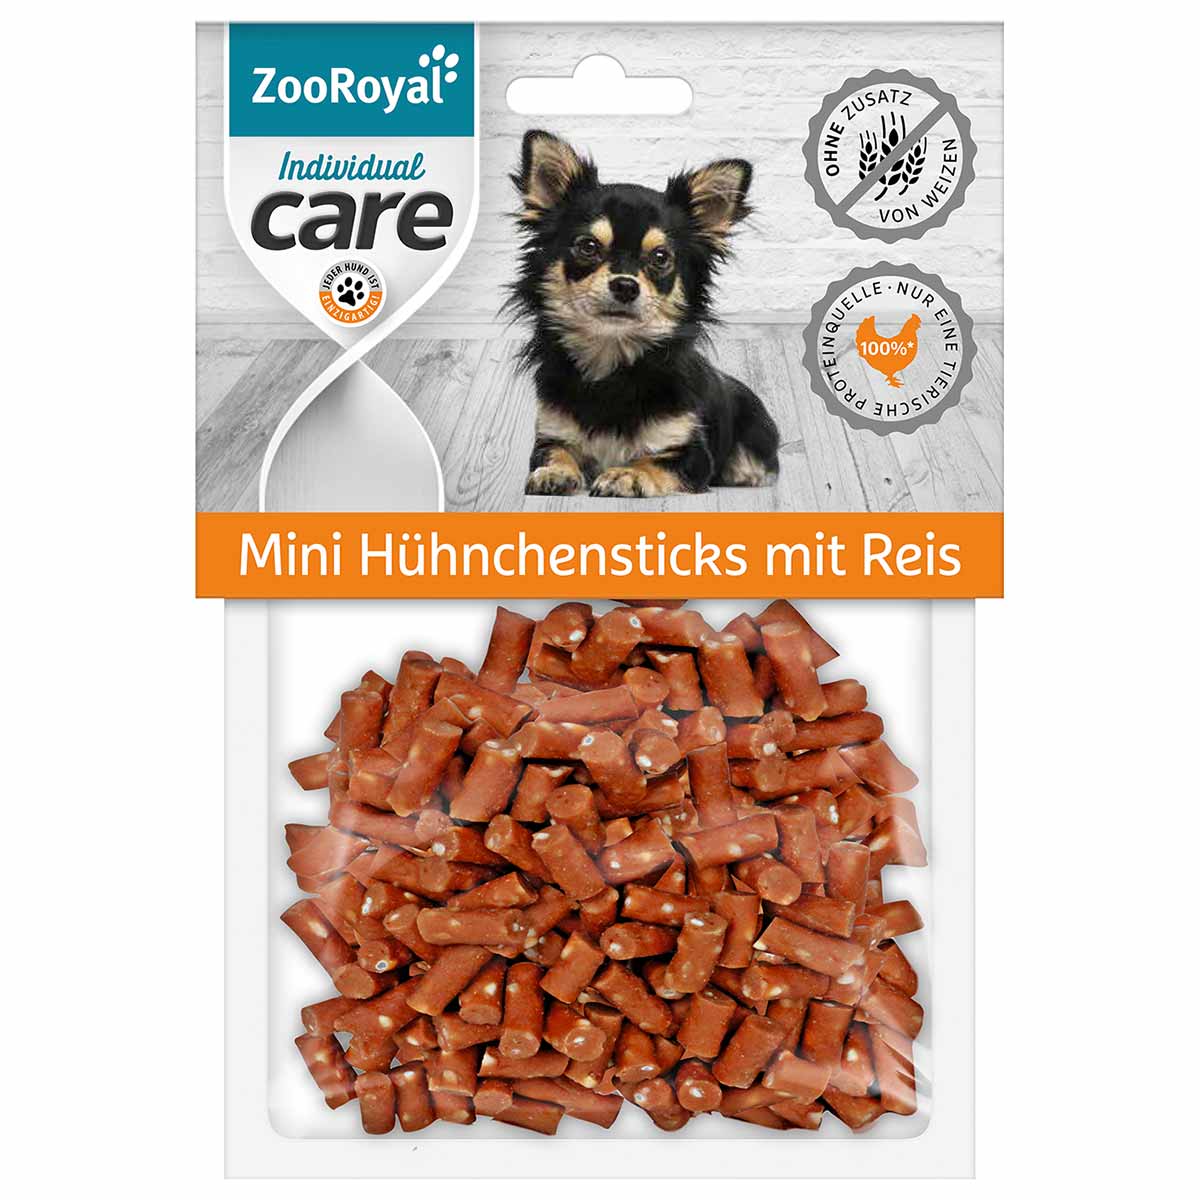 ZooRoyal Individual care Mini Hühnchensticks mit Reis 70g